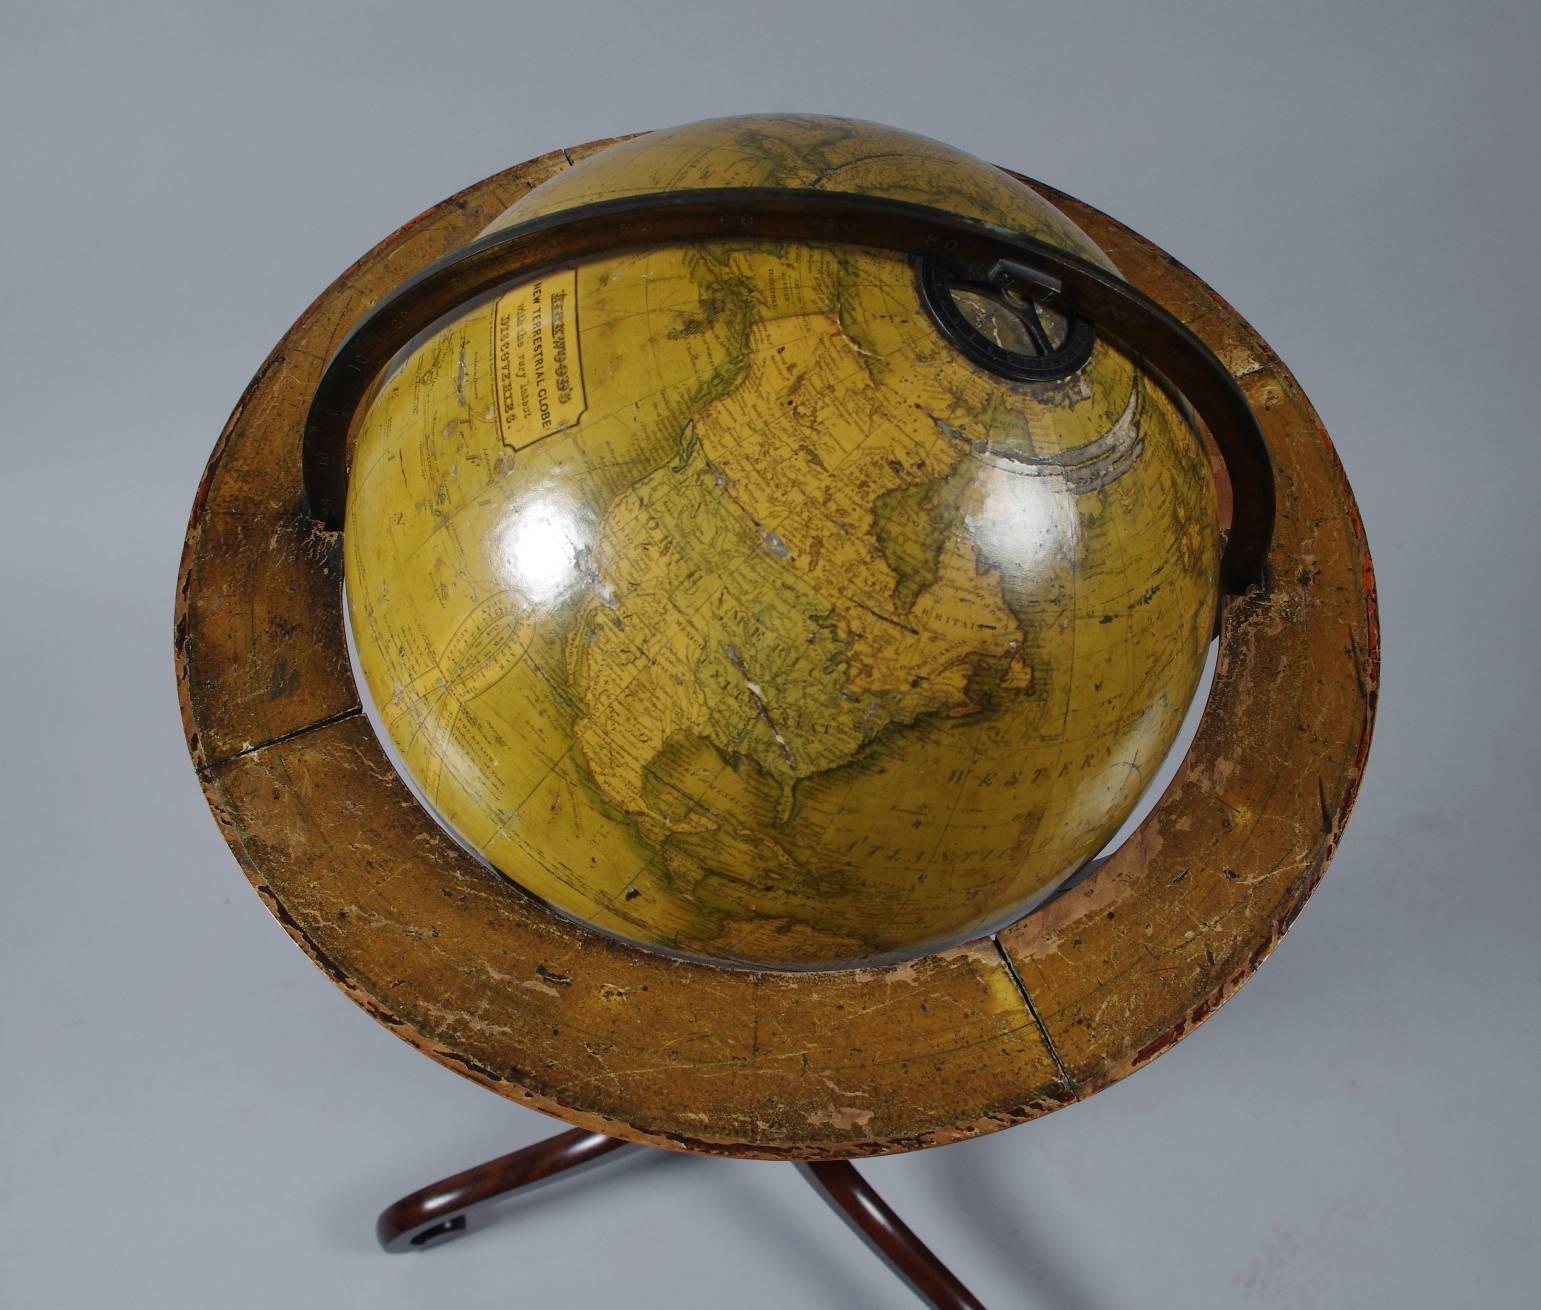 William IV Terrestrial Library Globe by Kirkwood